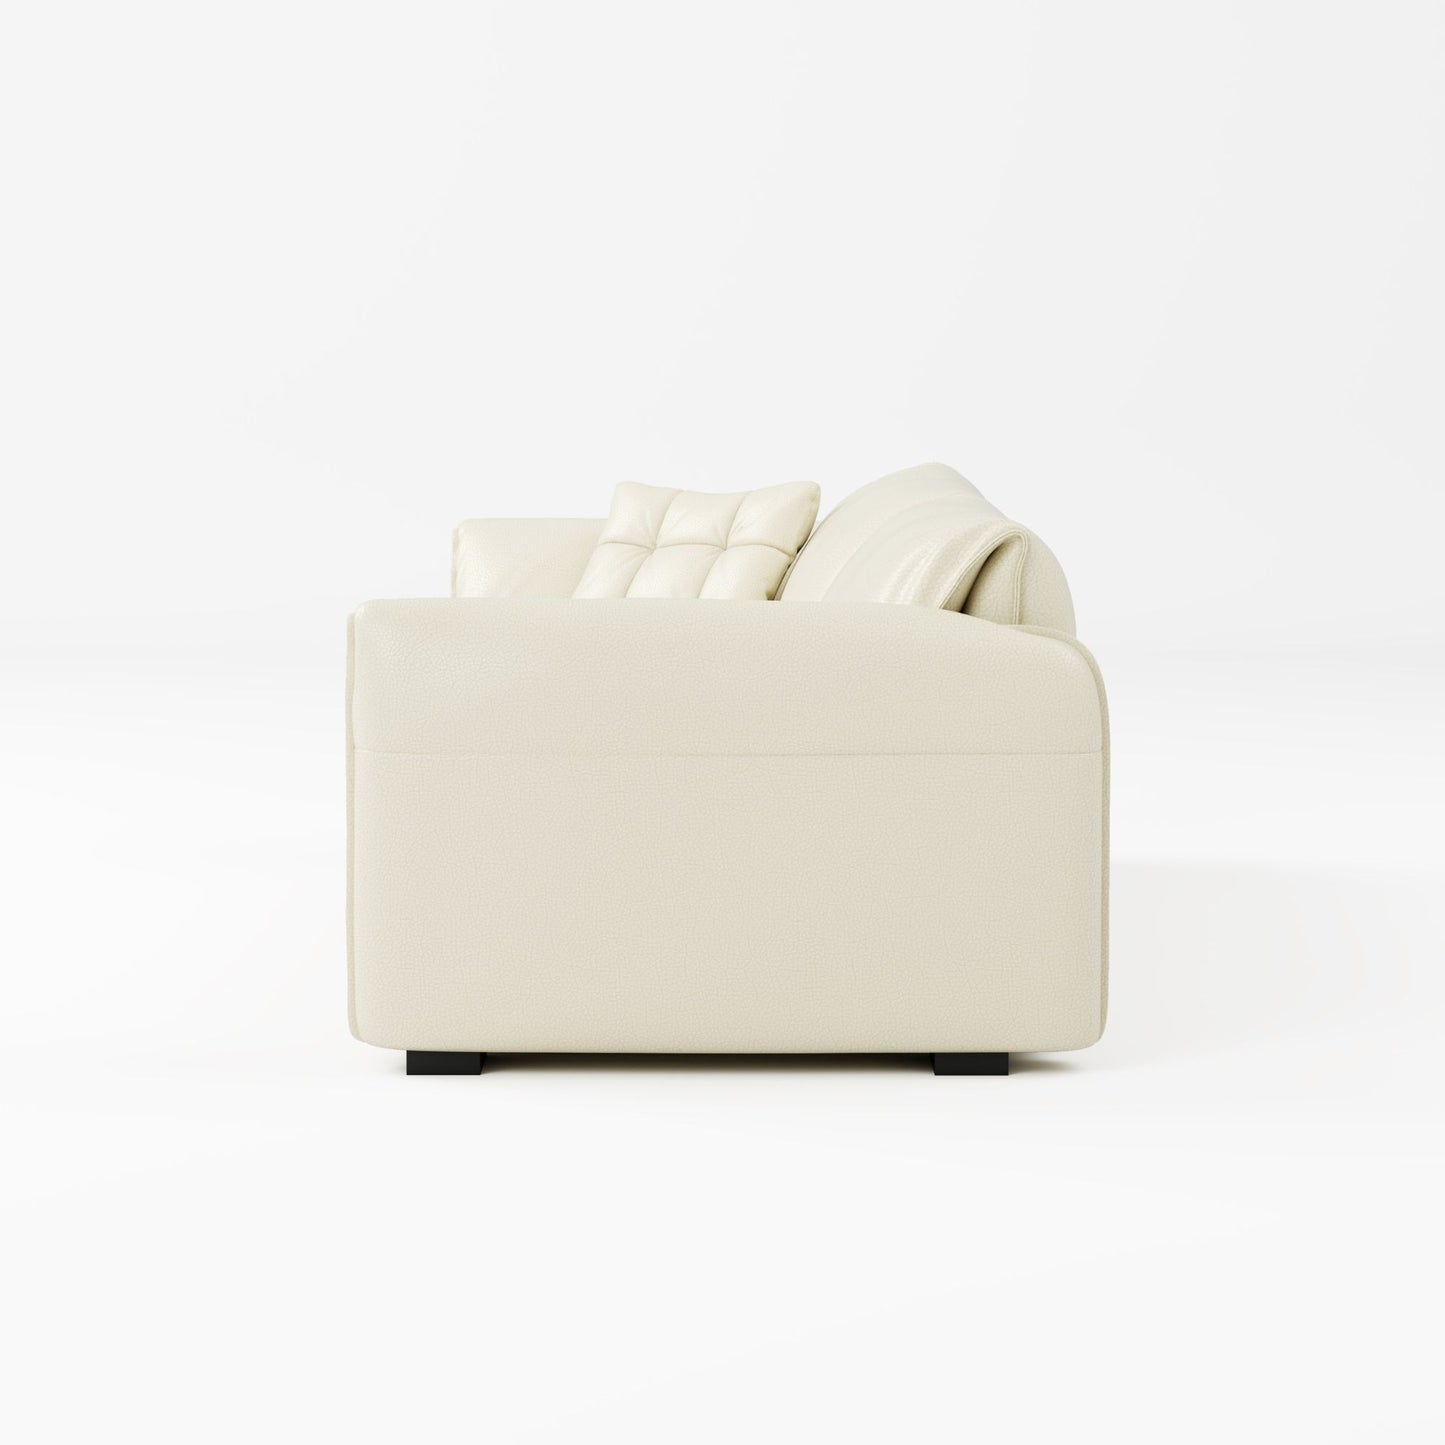 Comfy white top grain full leather sofa